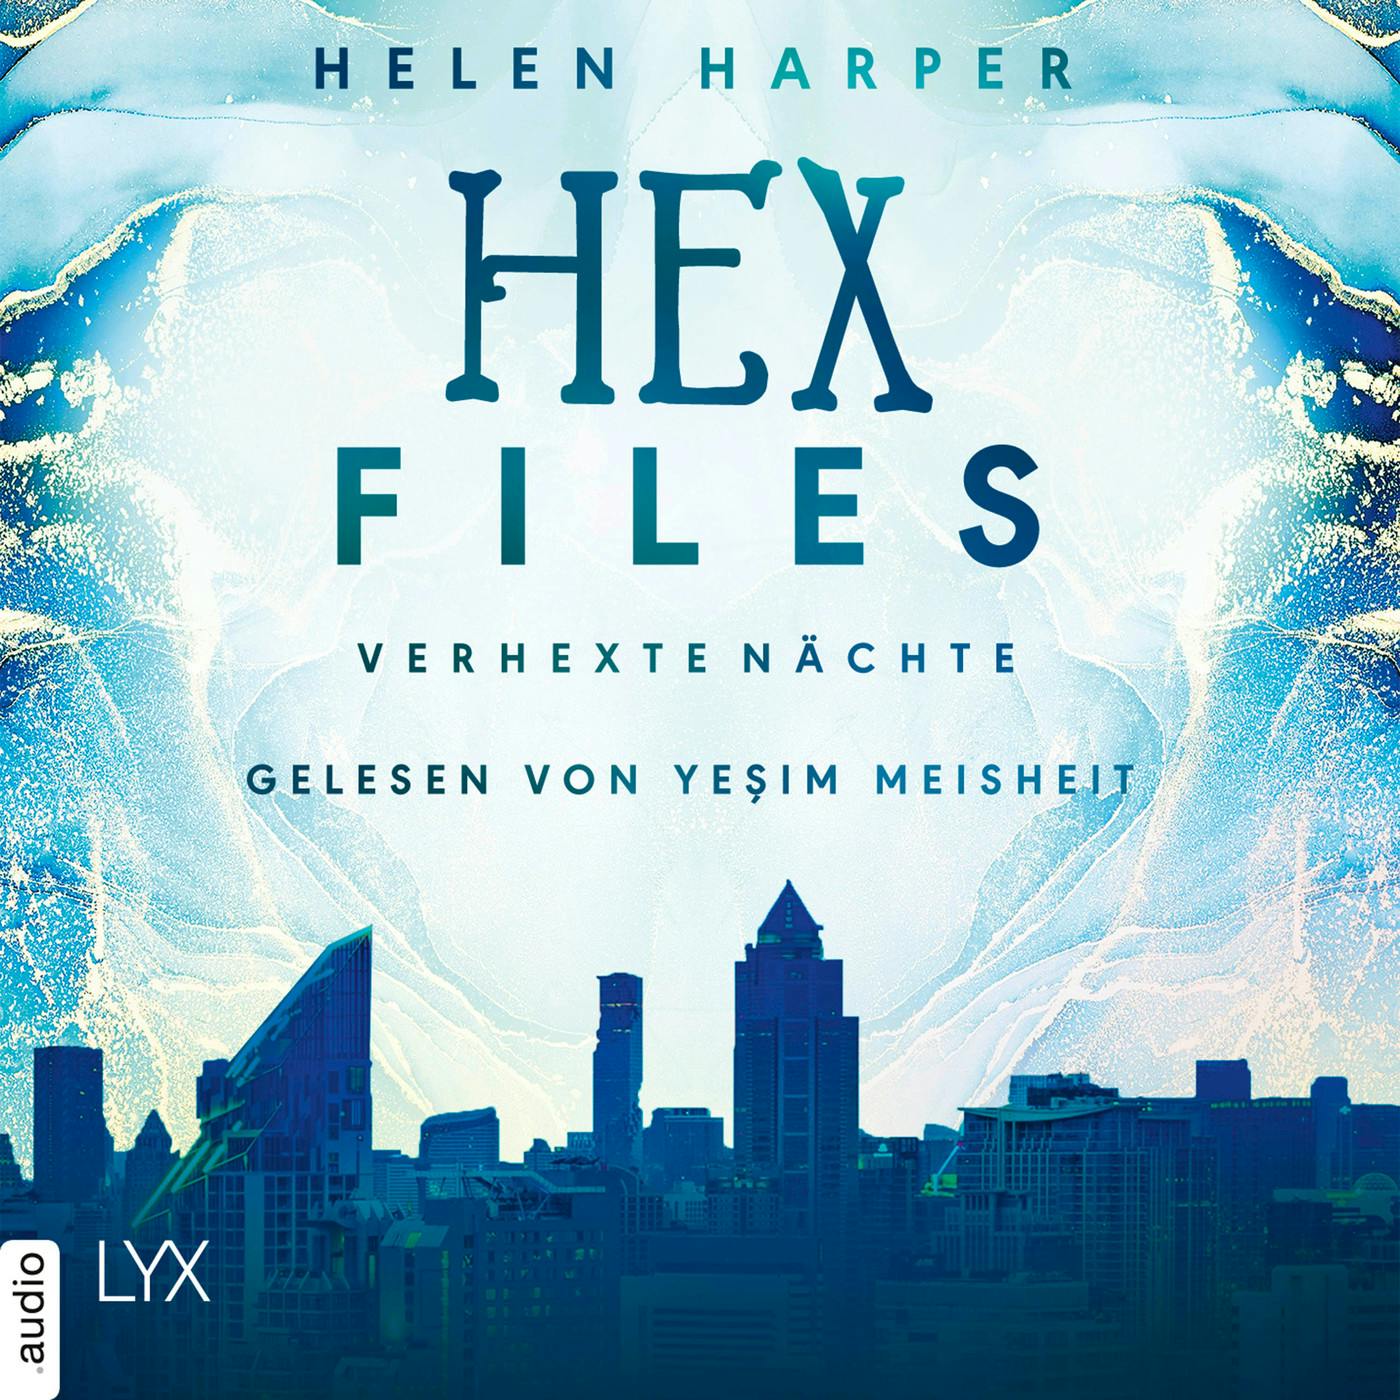 Verhexte Nächte - Hex Files, Band 3 (Ungekürzt) - Helen Harper